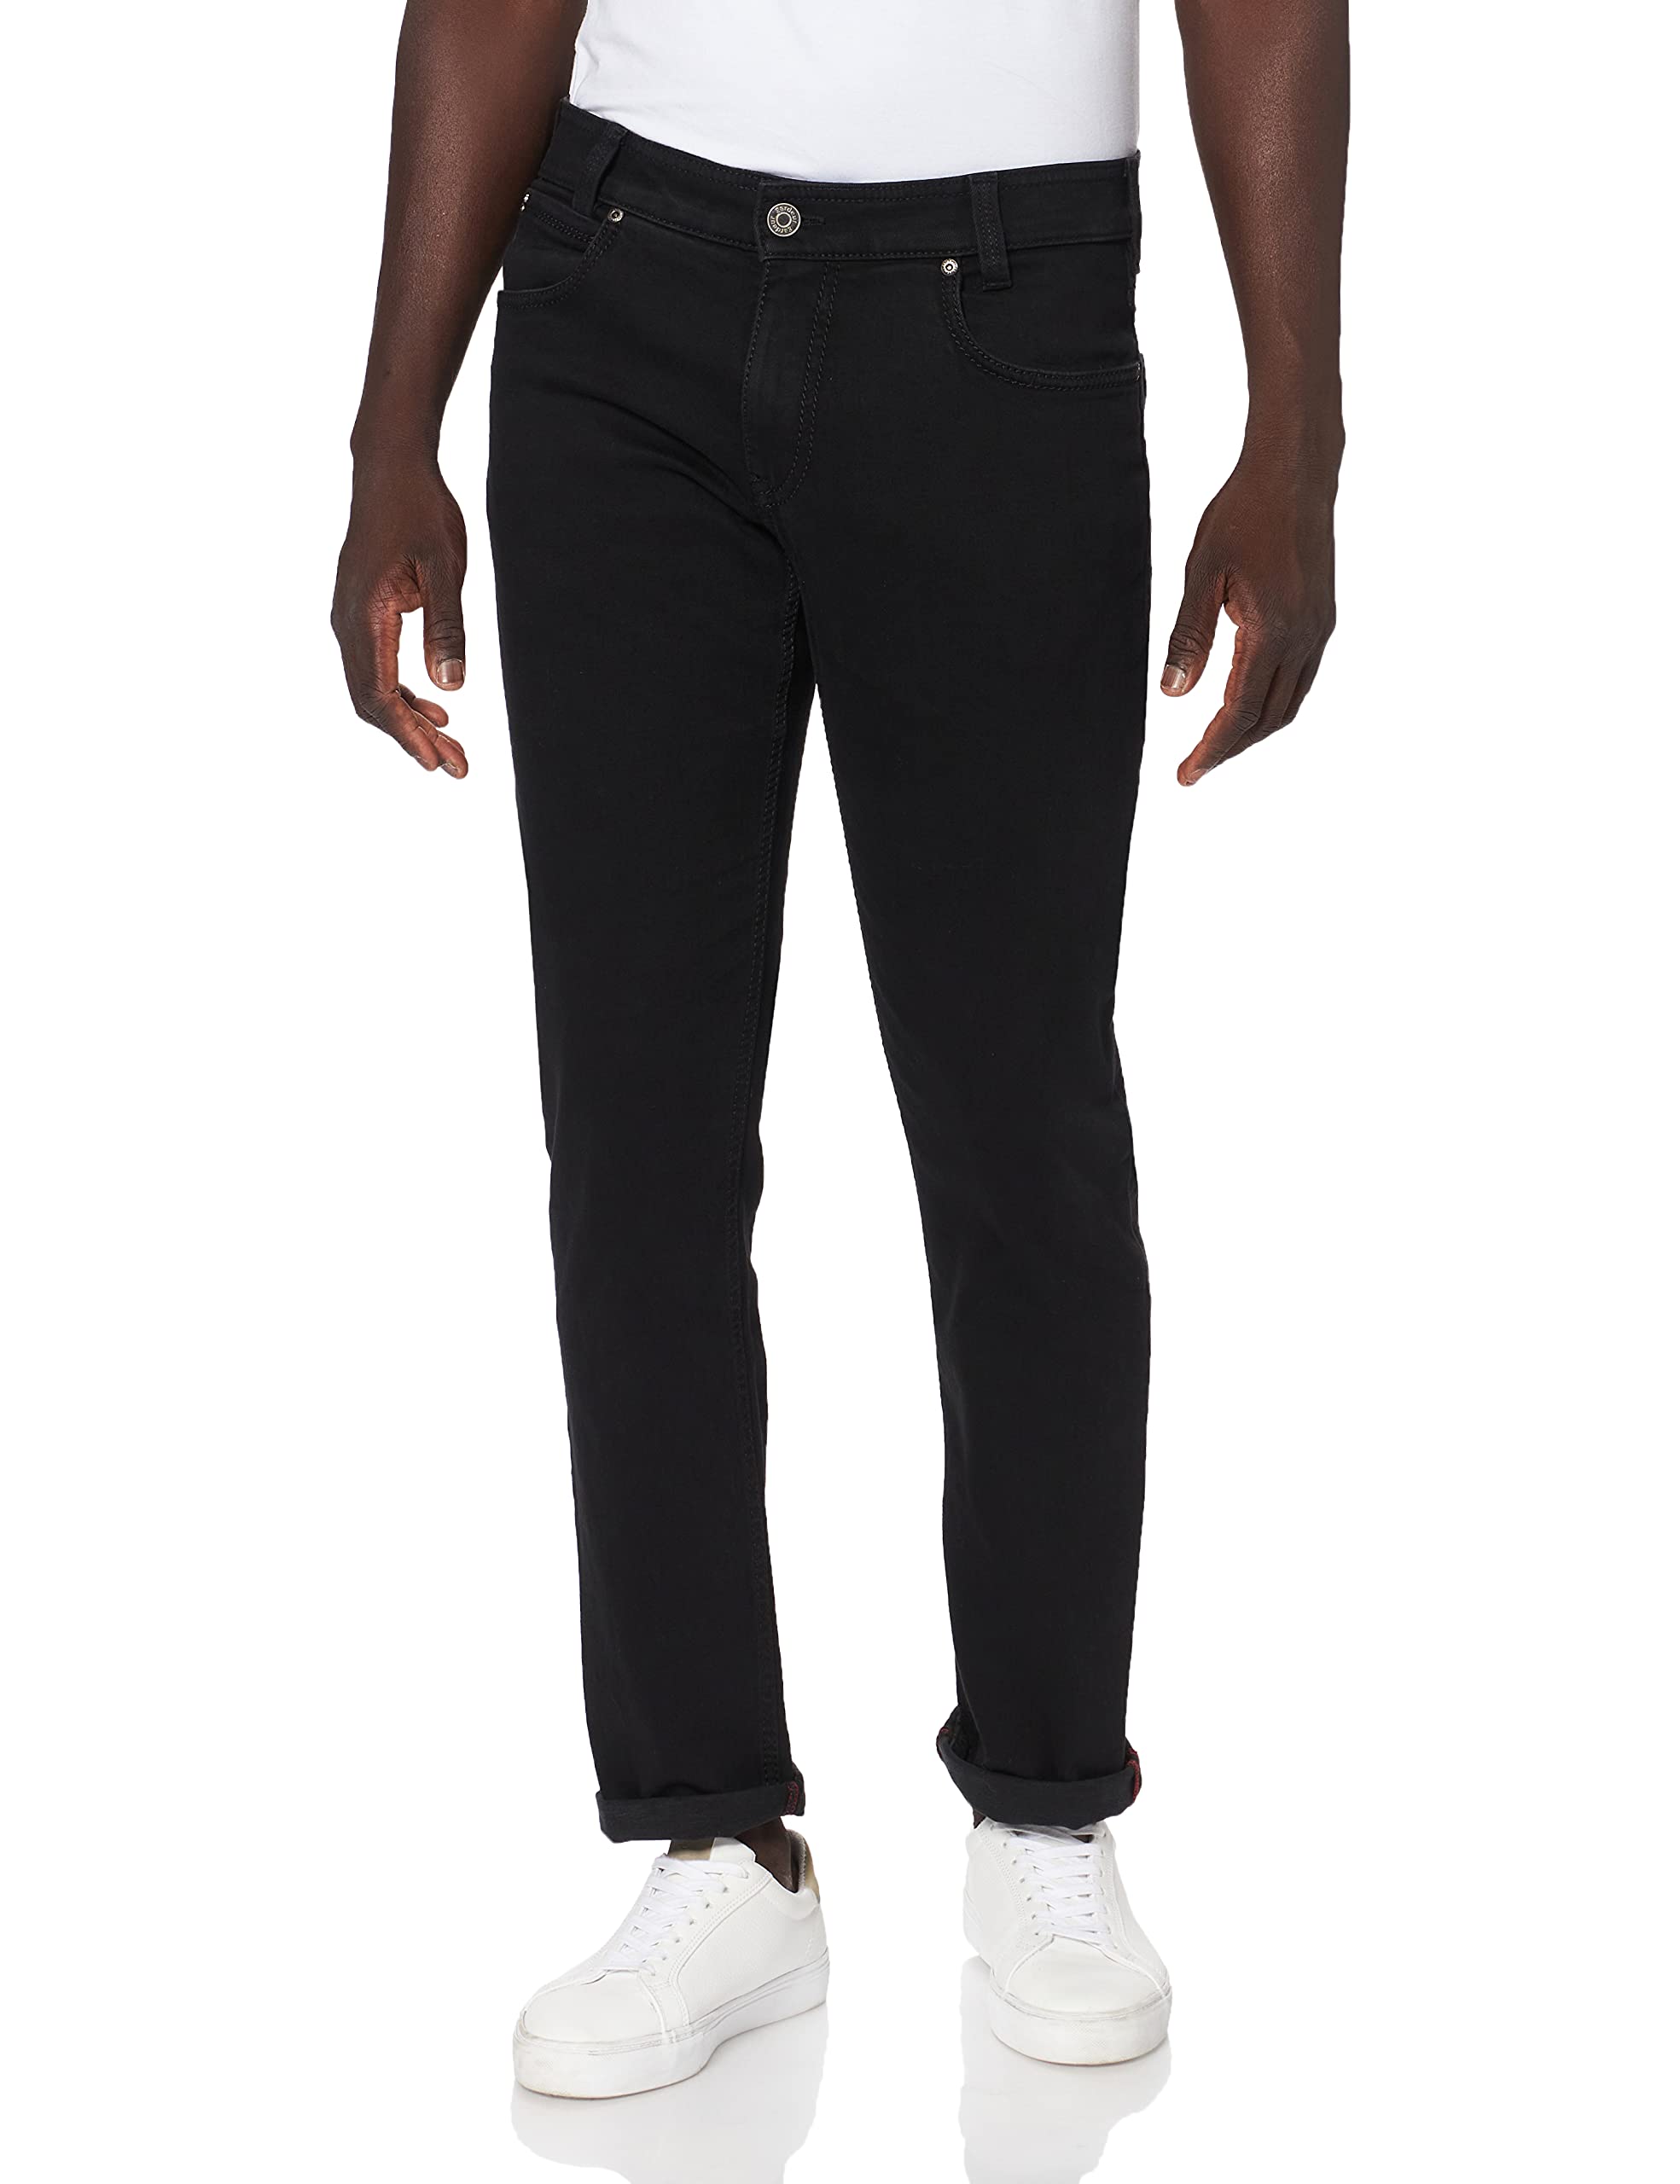 Atelier GARDEUR Herren Batu Comfort Stretch Jeans, Black/Black 799, 33W / 32L